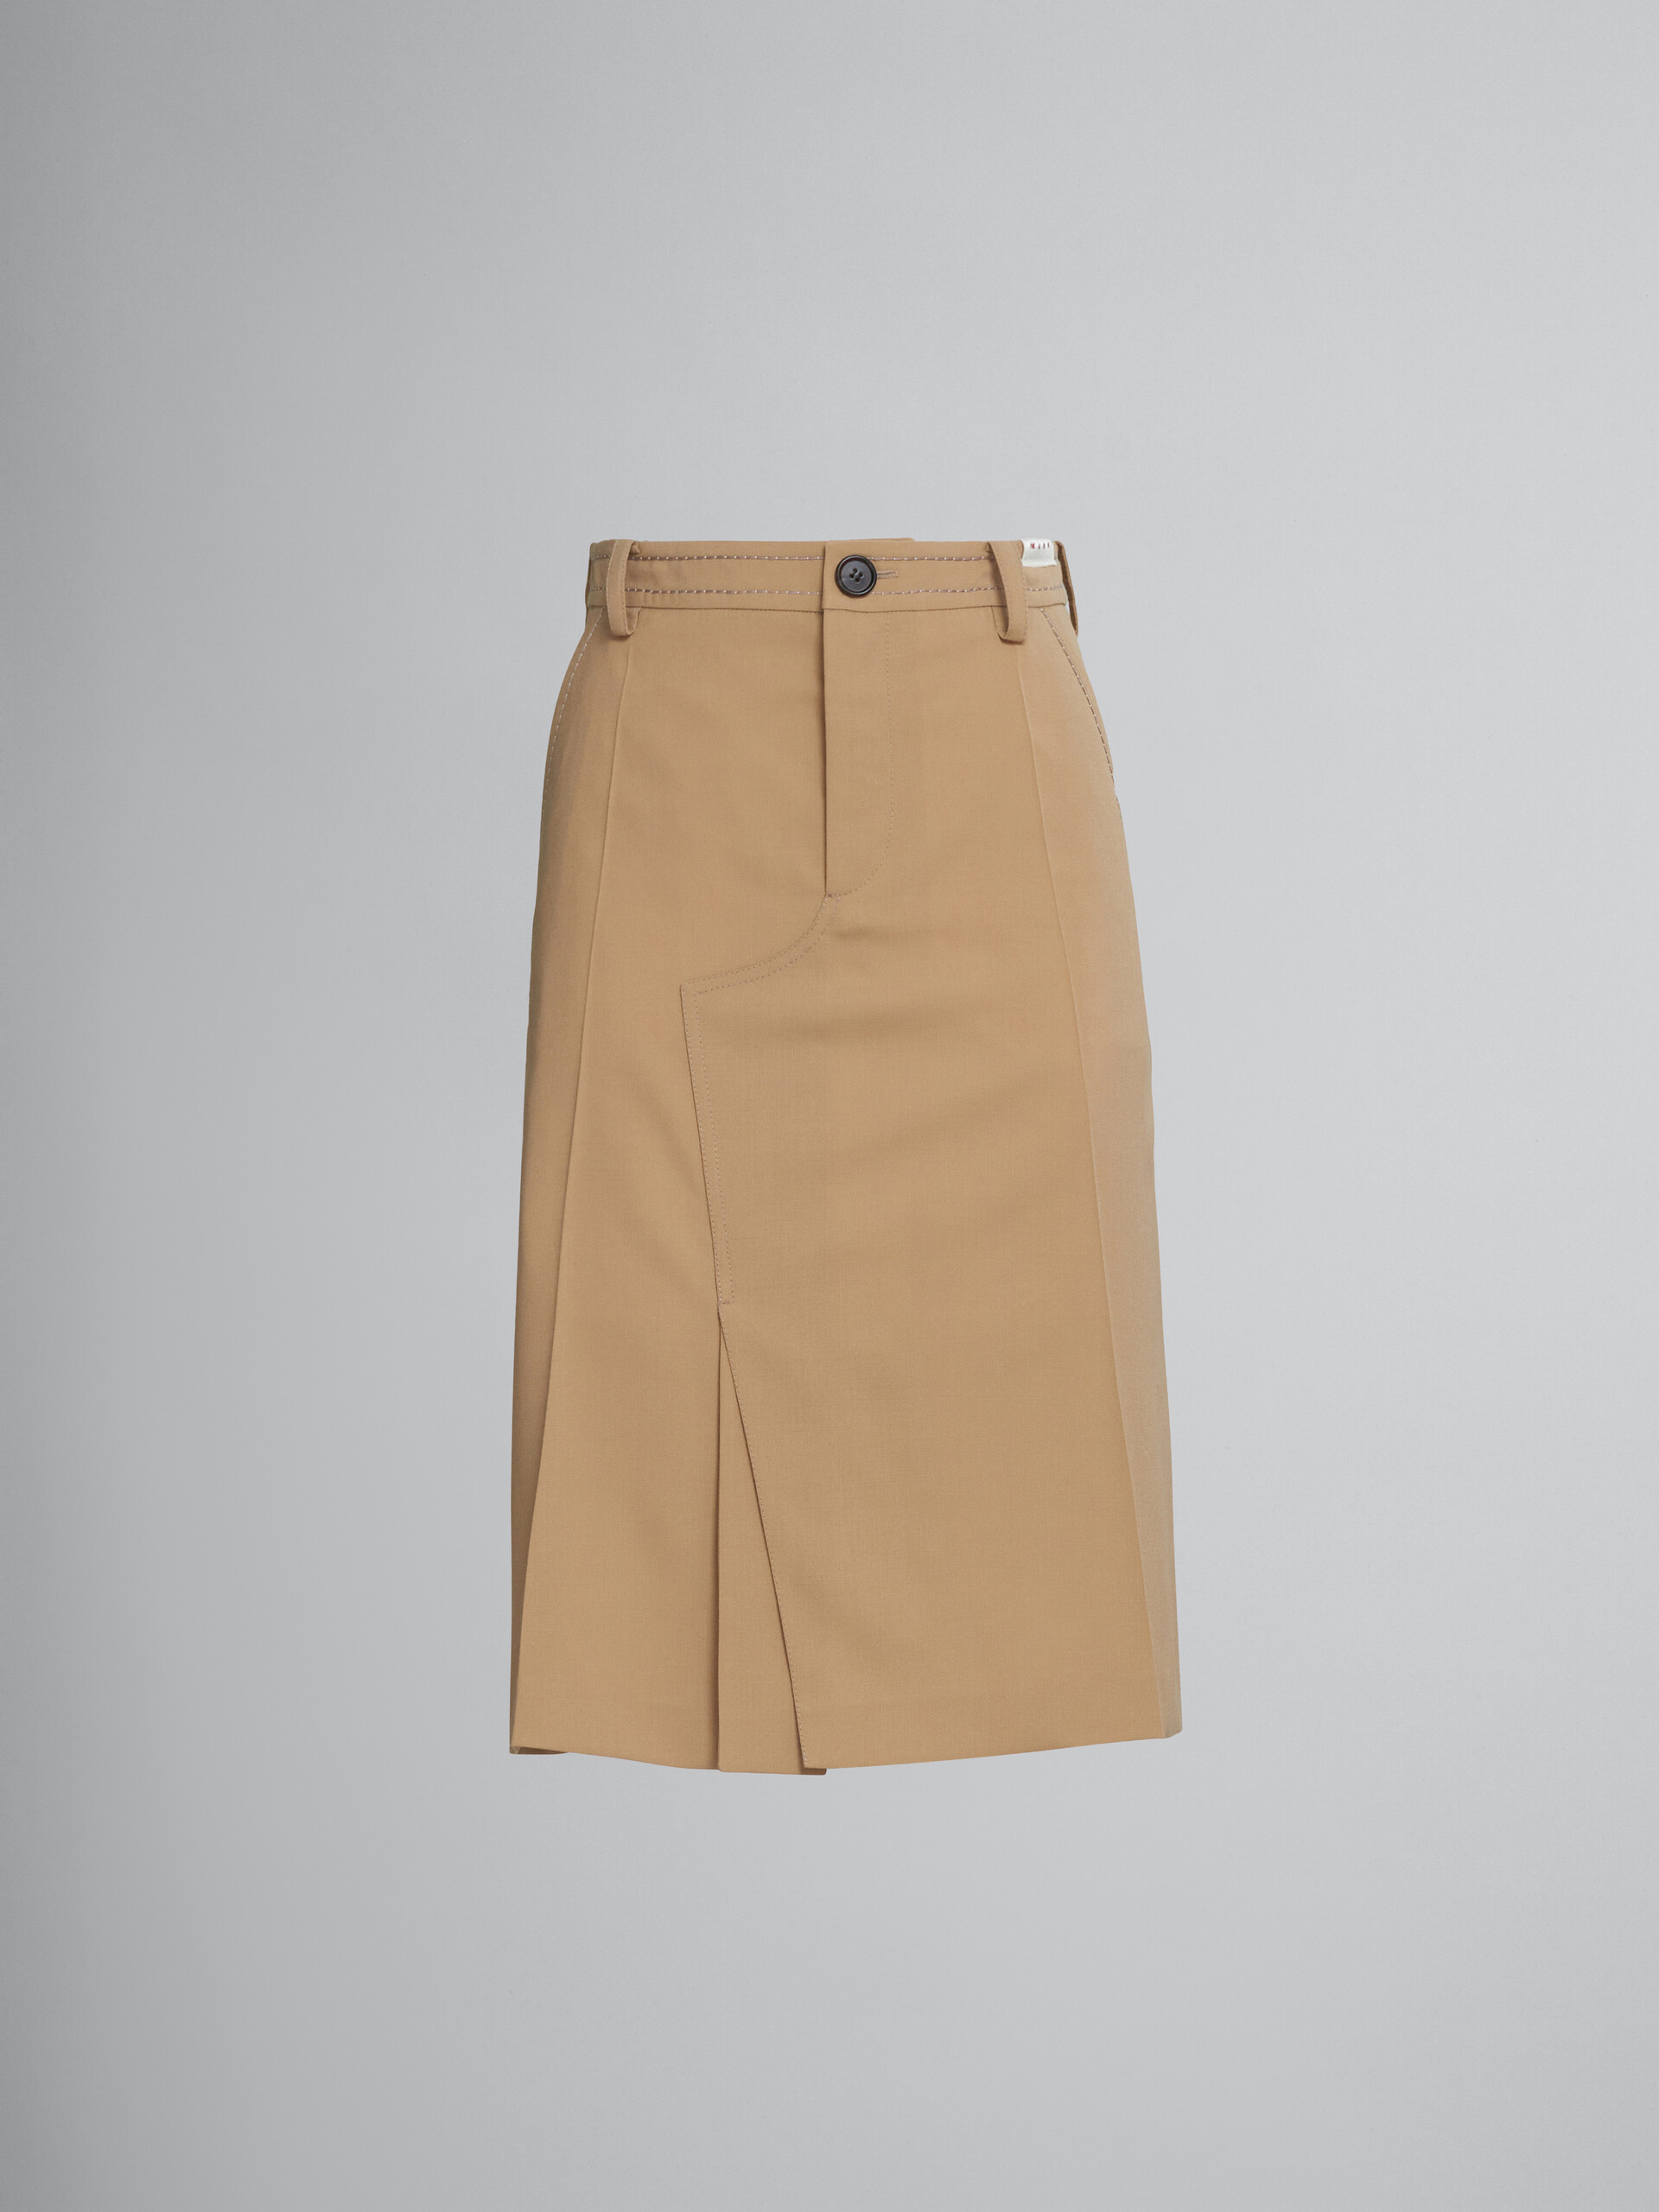 Beige tropical wool skirt - Skirts - Image 1